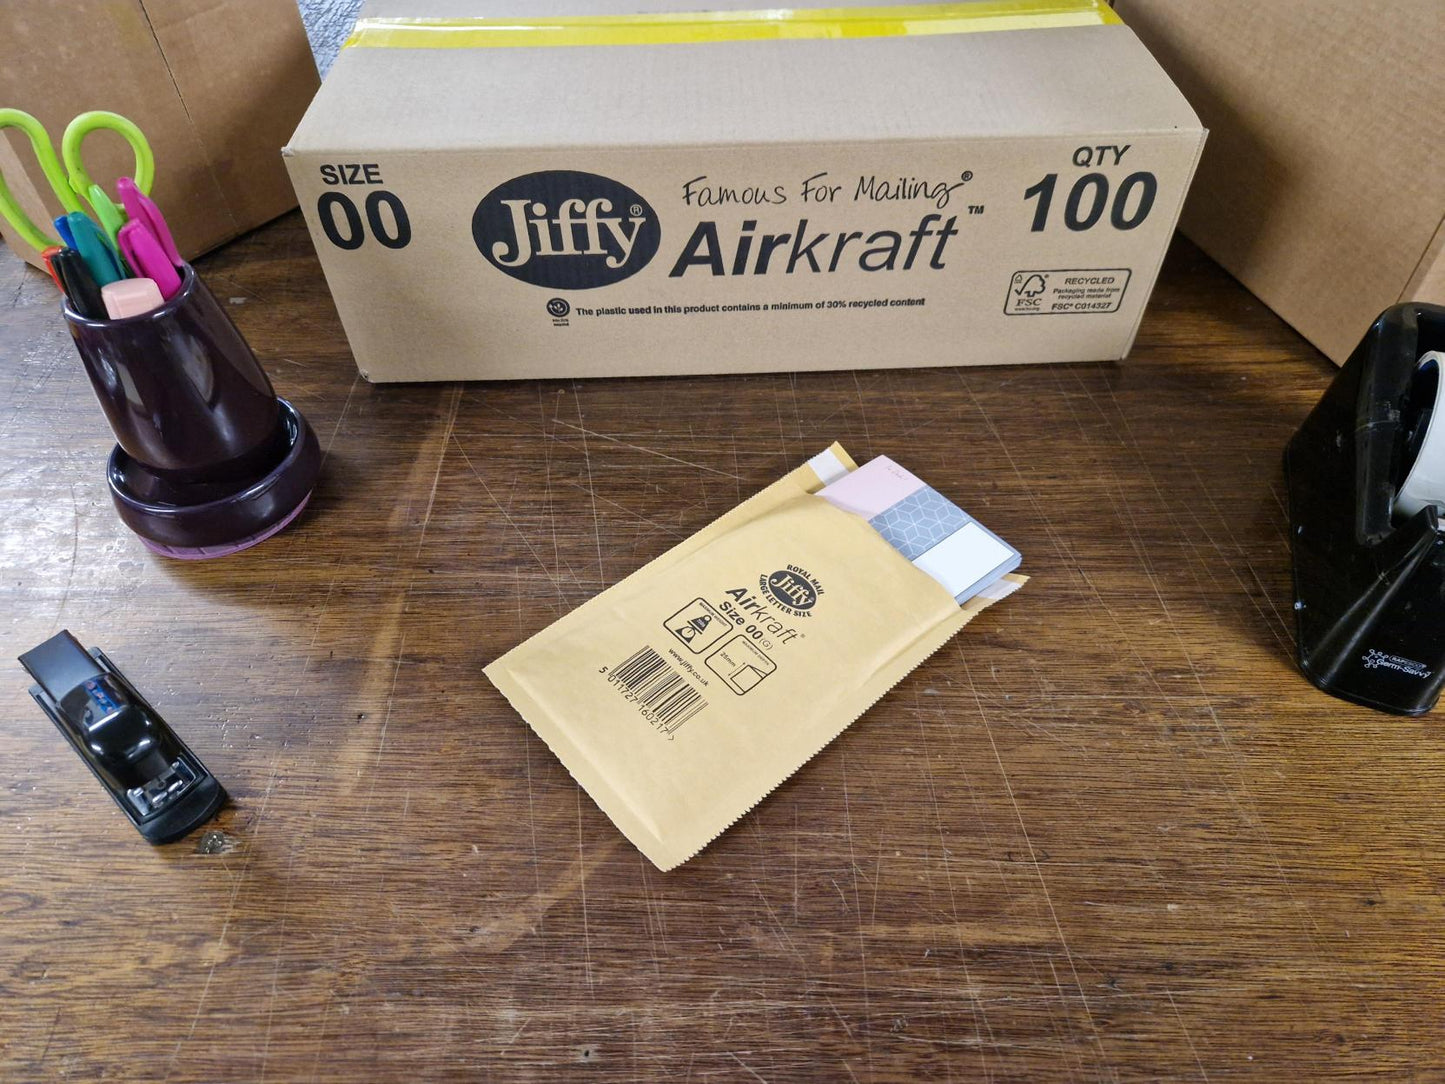 Box of Jiffy Airkraft JL00 - 145mm x 210mm (100 envelopes)